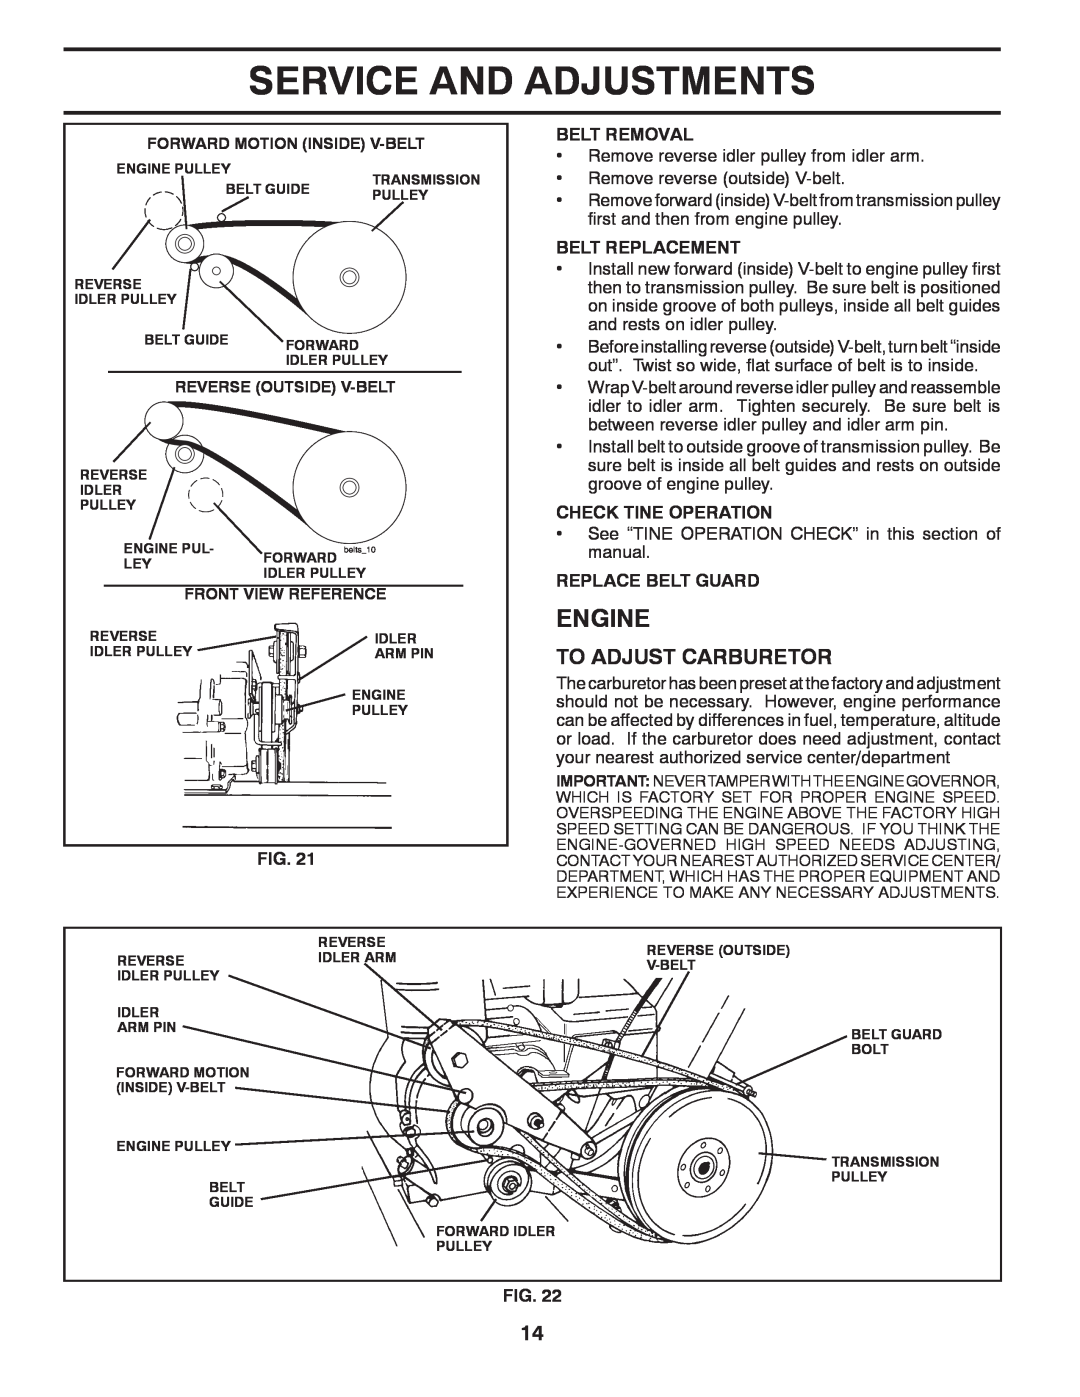 Poulan HDF800X To Adjust Carburetor, Belt Removal, Belt Replacement, Check Tine Operation, Replace Belt Guard, Engine 